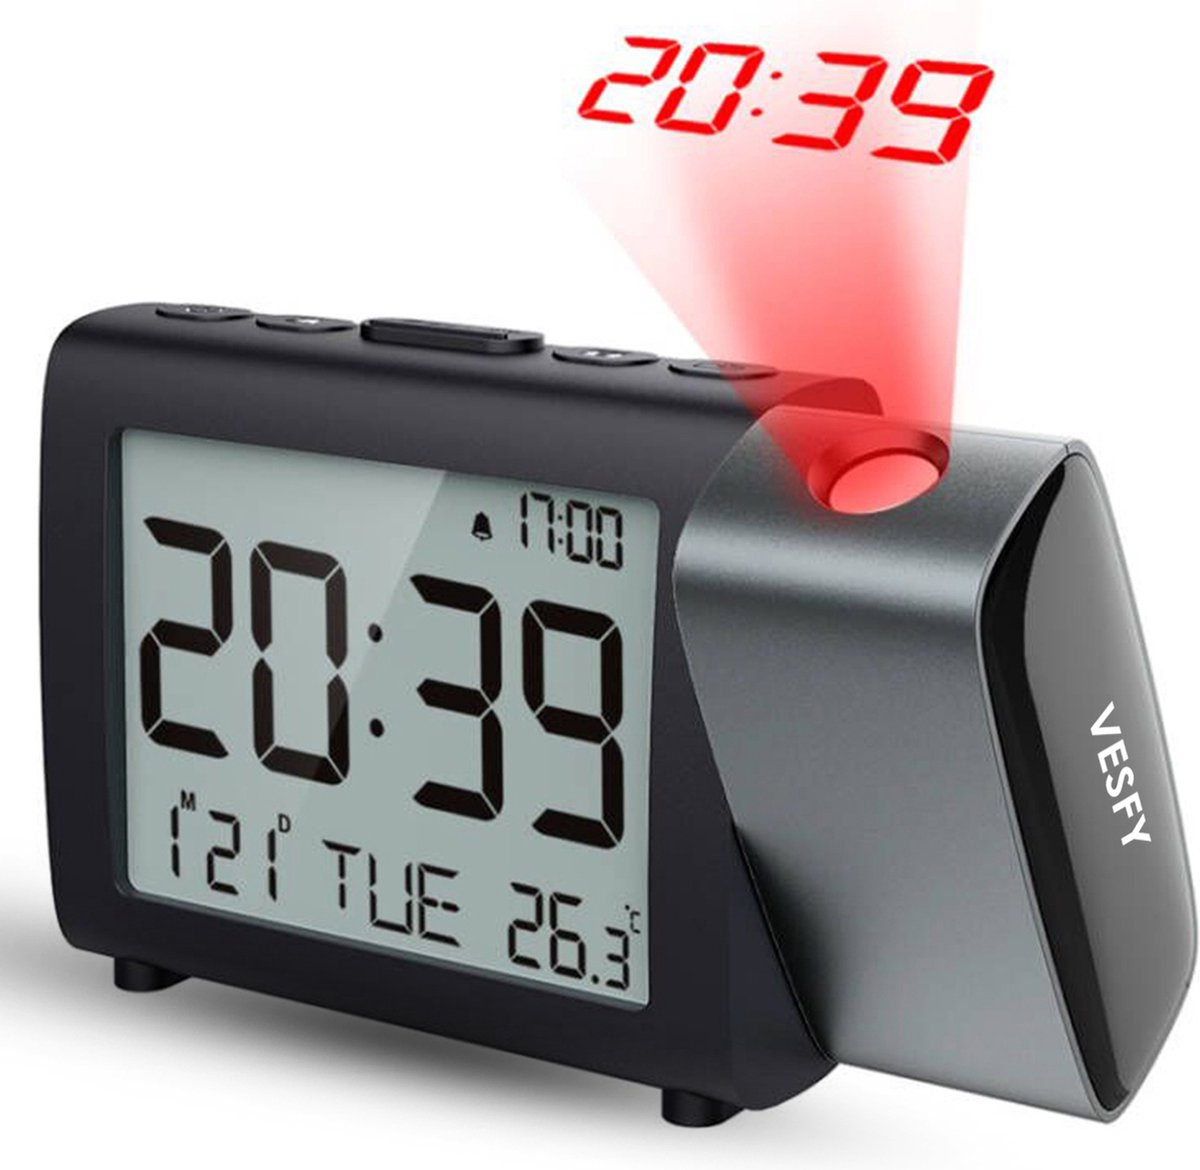 Vesfy Wekker met Projectie en Thermometer - Incl USB Kabel en Adapter - Digitale wekker